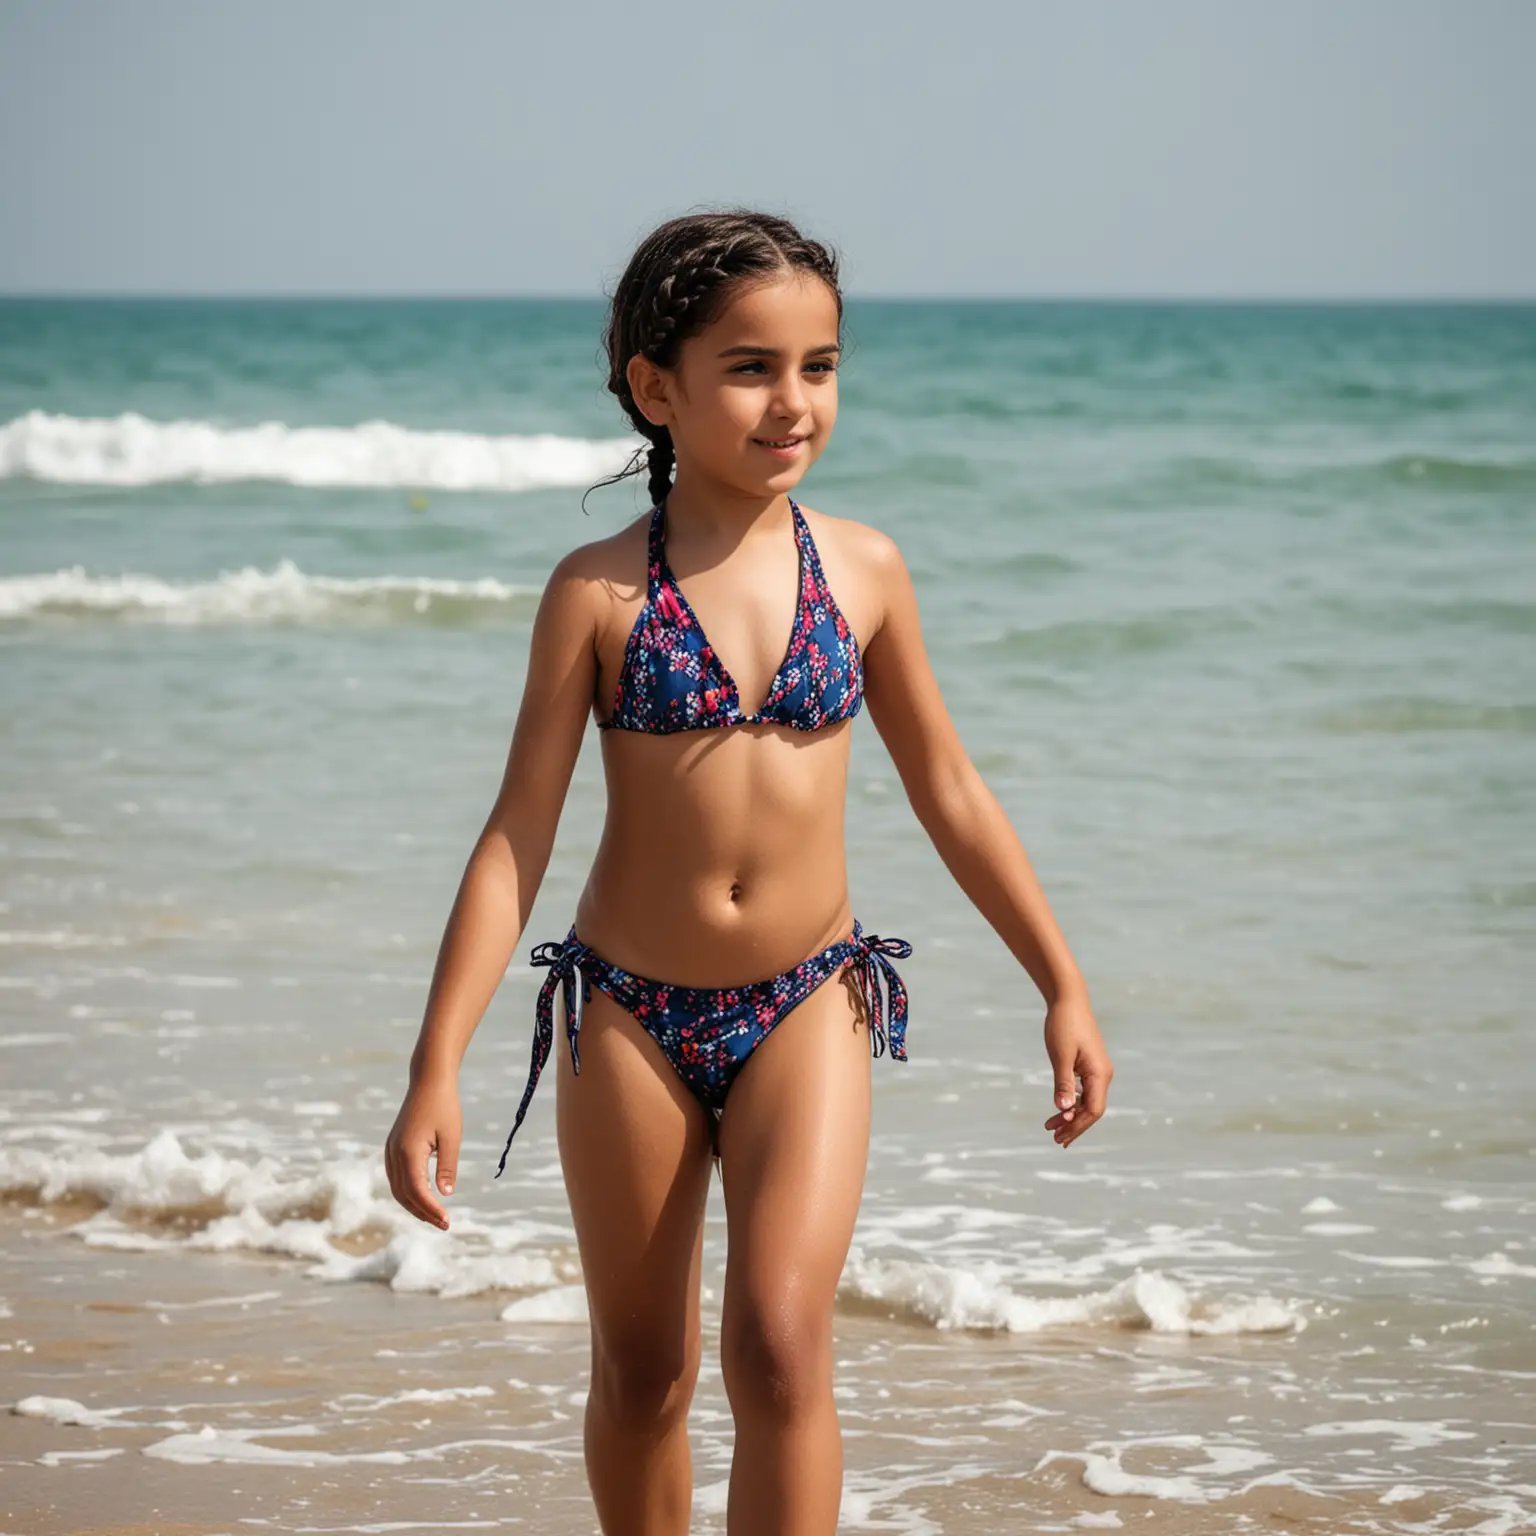 Arabic-Girl-Walking-on-Beach-with-Braided-Hair-in-Bikini